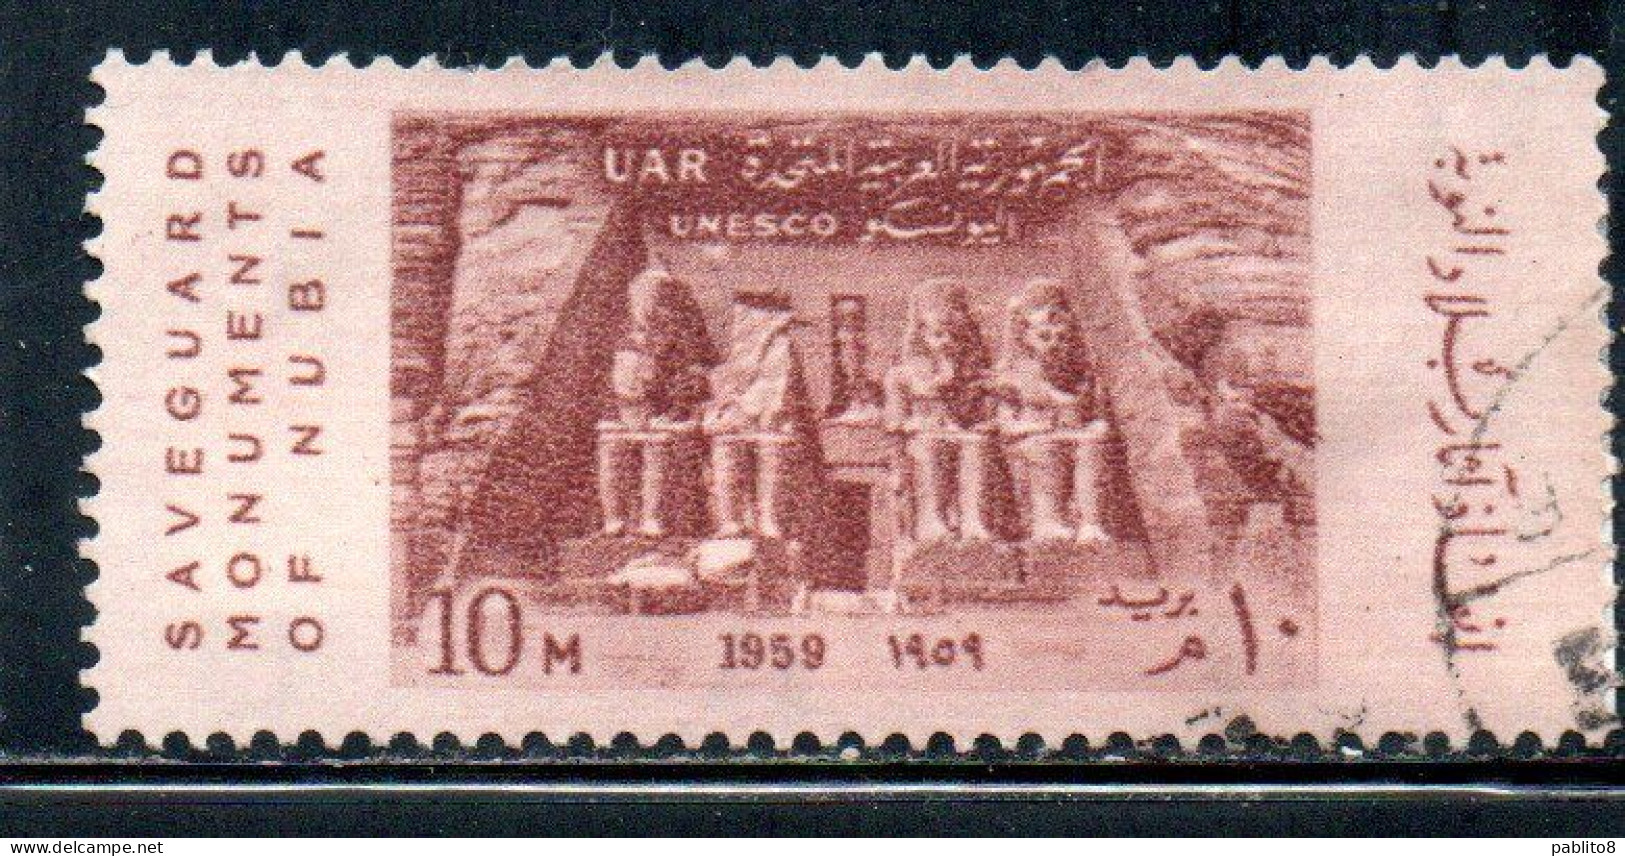 UAR EGYPT EGITTO 1959 SAVE HISTORIC MONUMENTS IN NUBIA ABU SIMBEL TEMPLE OF RAMSES II 10m USED USATO OBLITERE' - Gebruikt